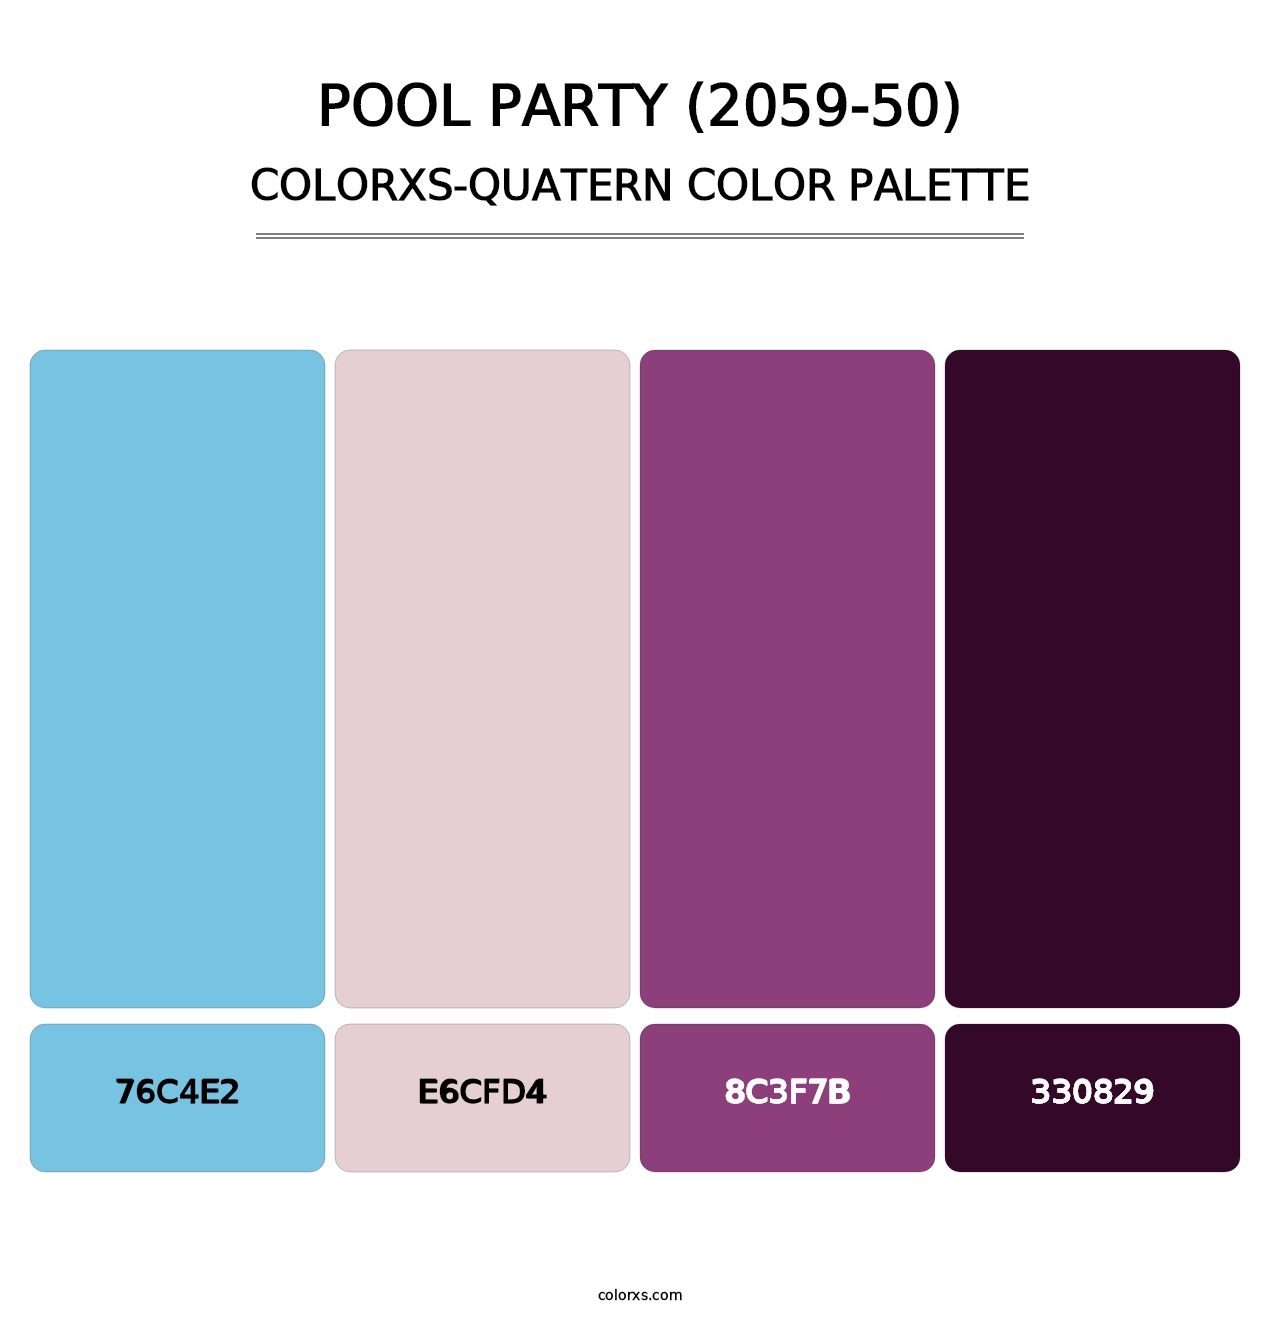 Pool Party (2059-50) - Colorxs Quatern Palette